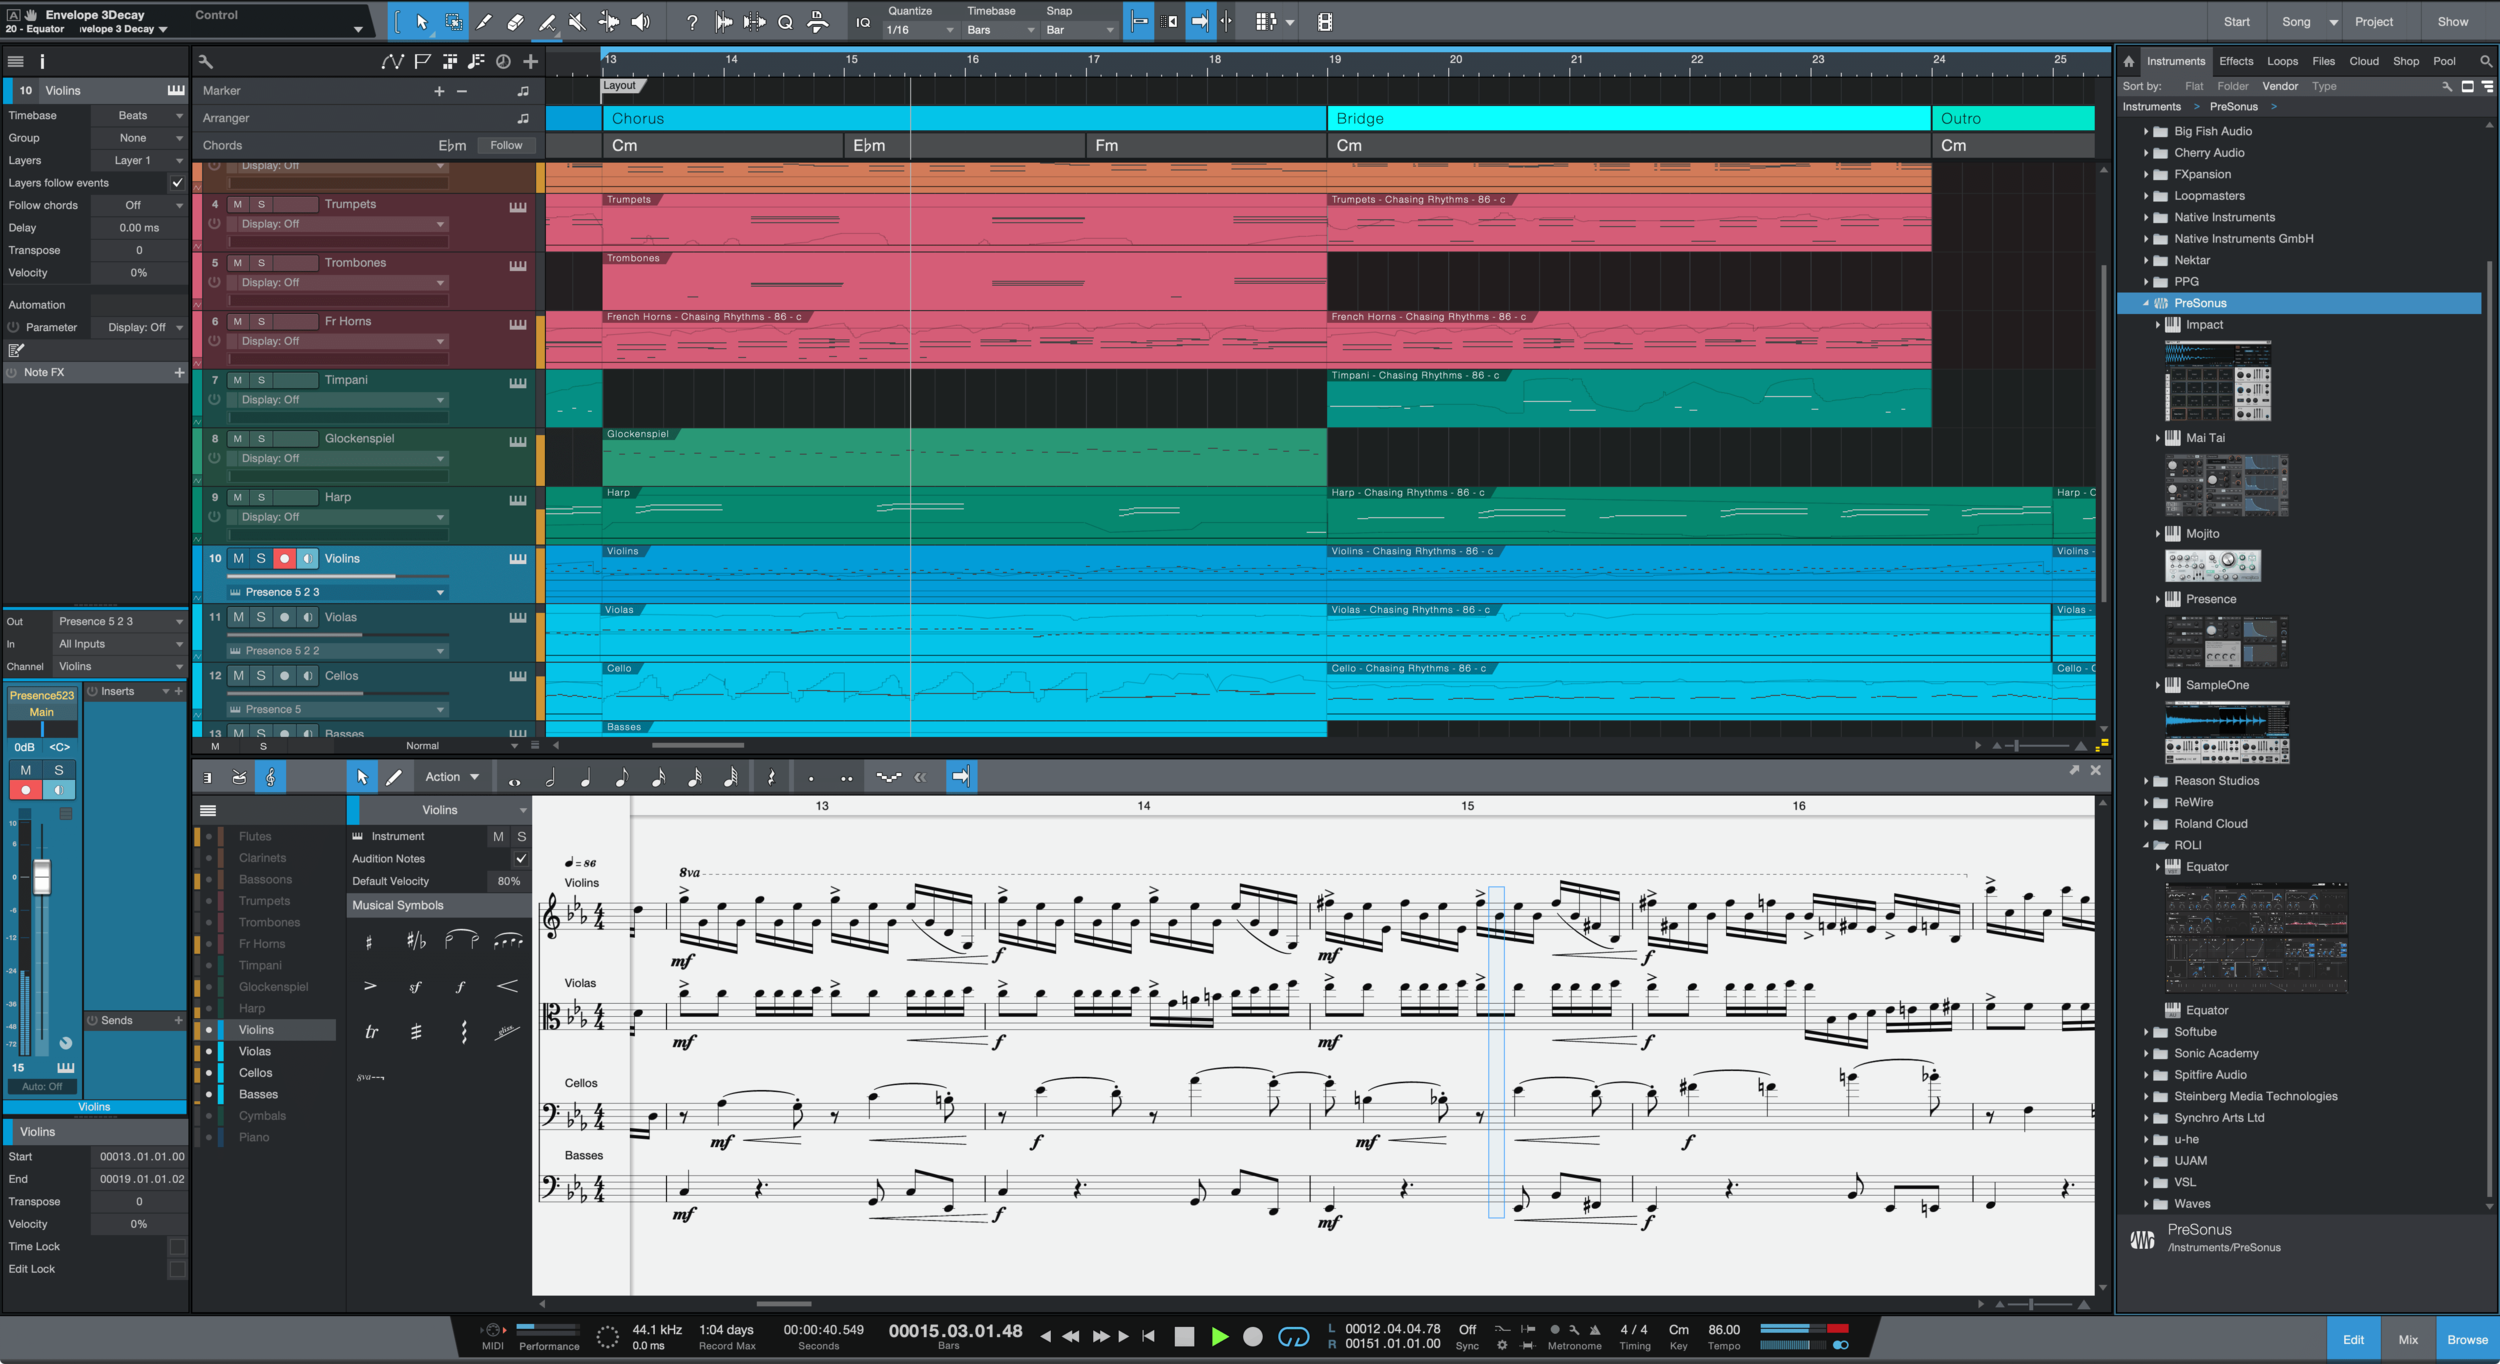 PreSonus Studio One 5 Announced - New Score Editor, Show Page, Mixing